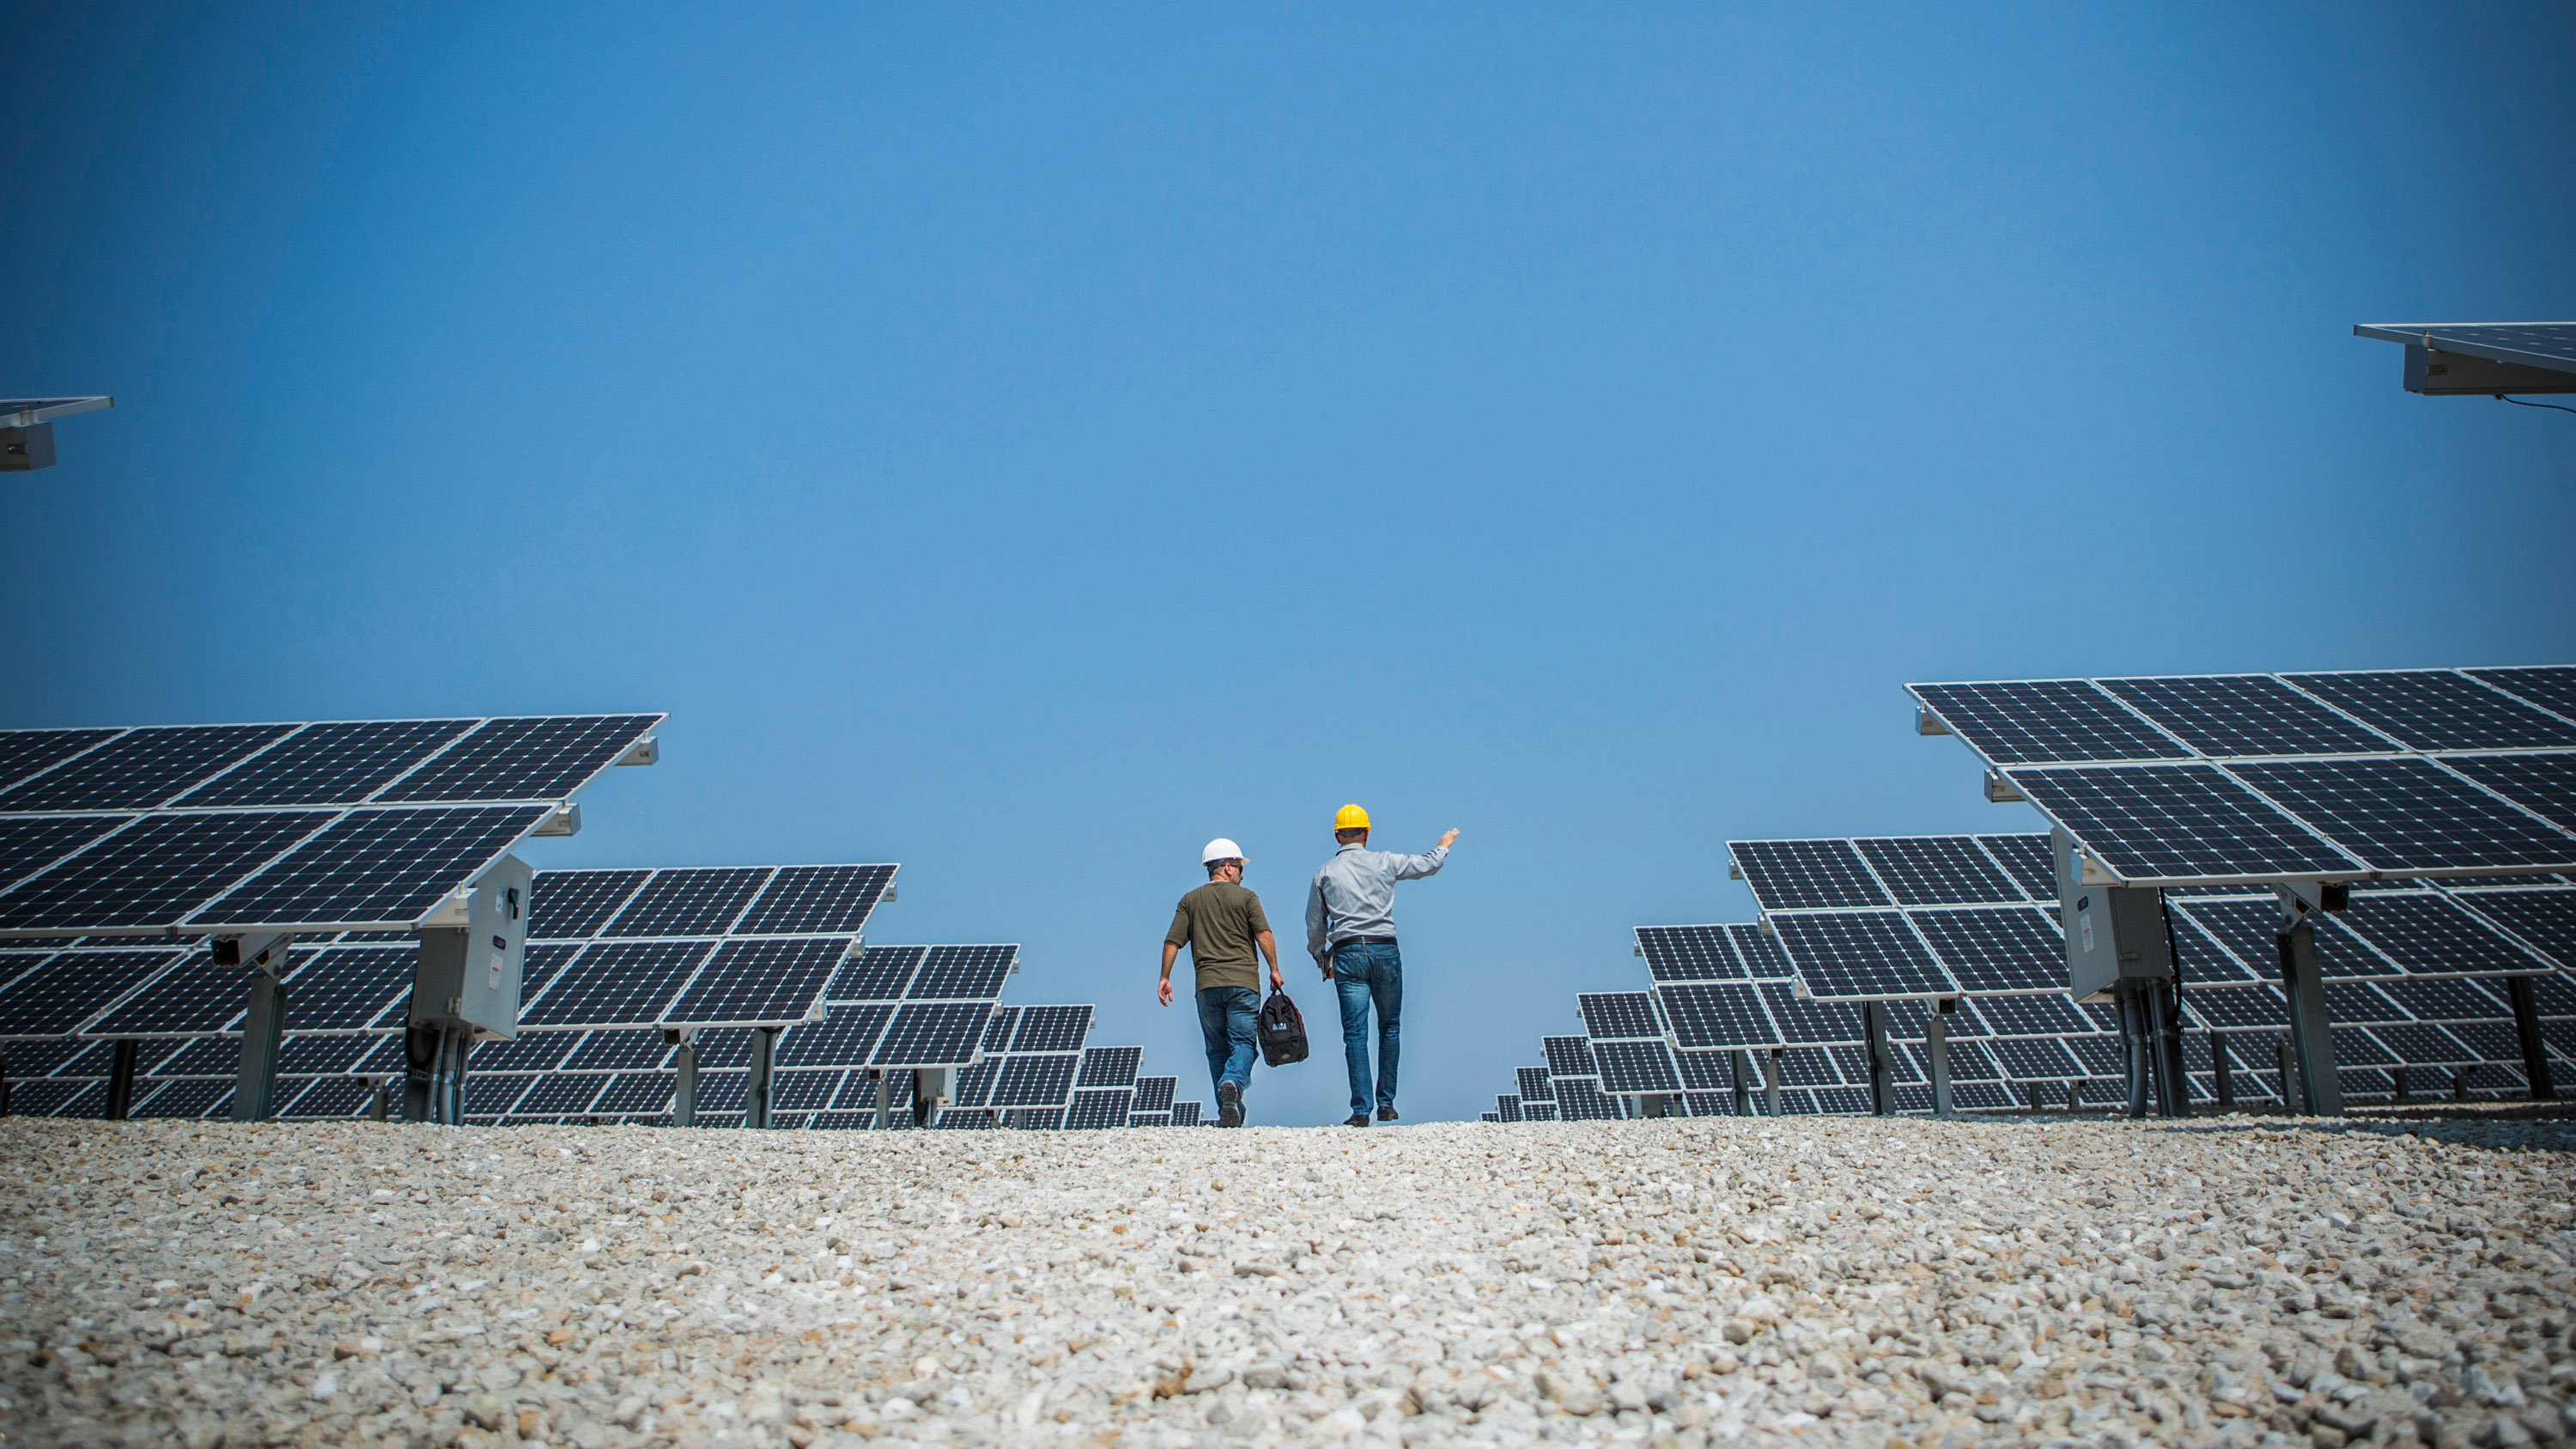 Two technicians in hard hats walk between rows of solar panels